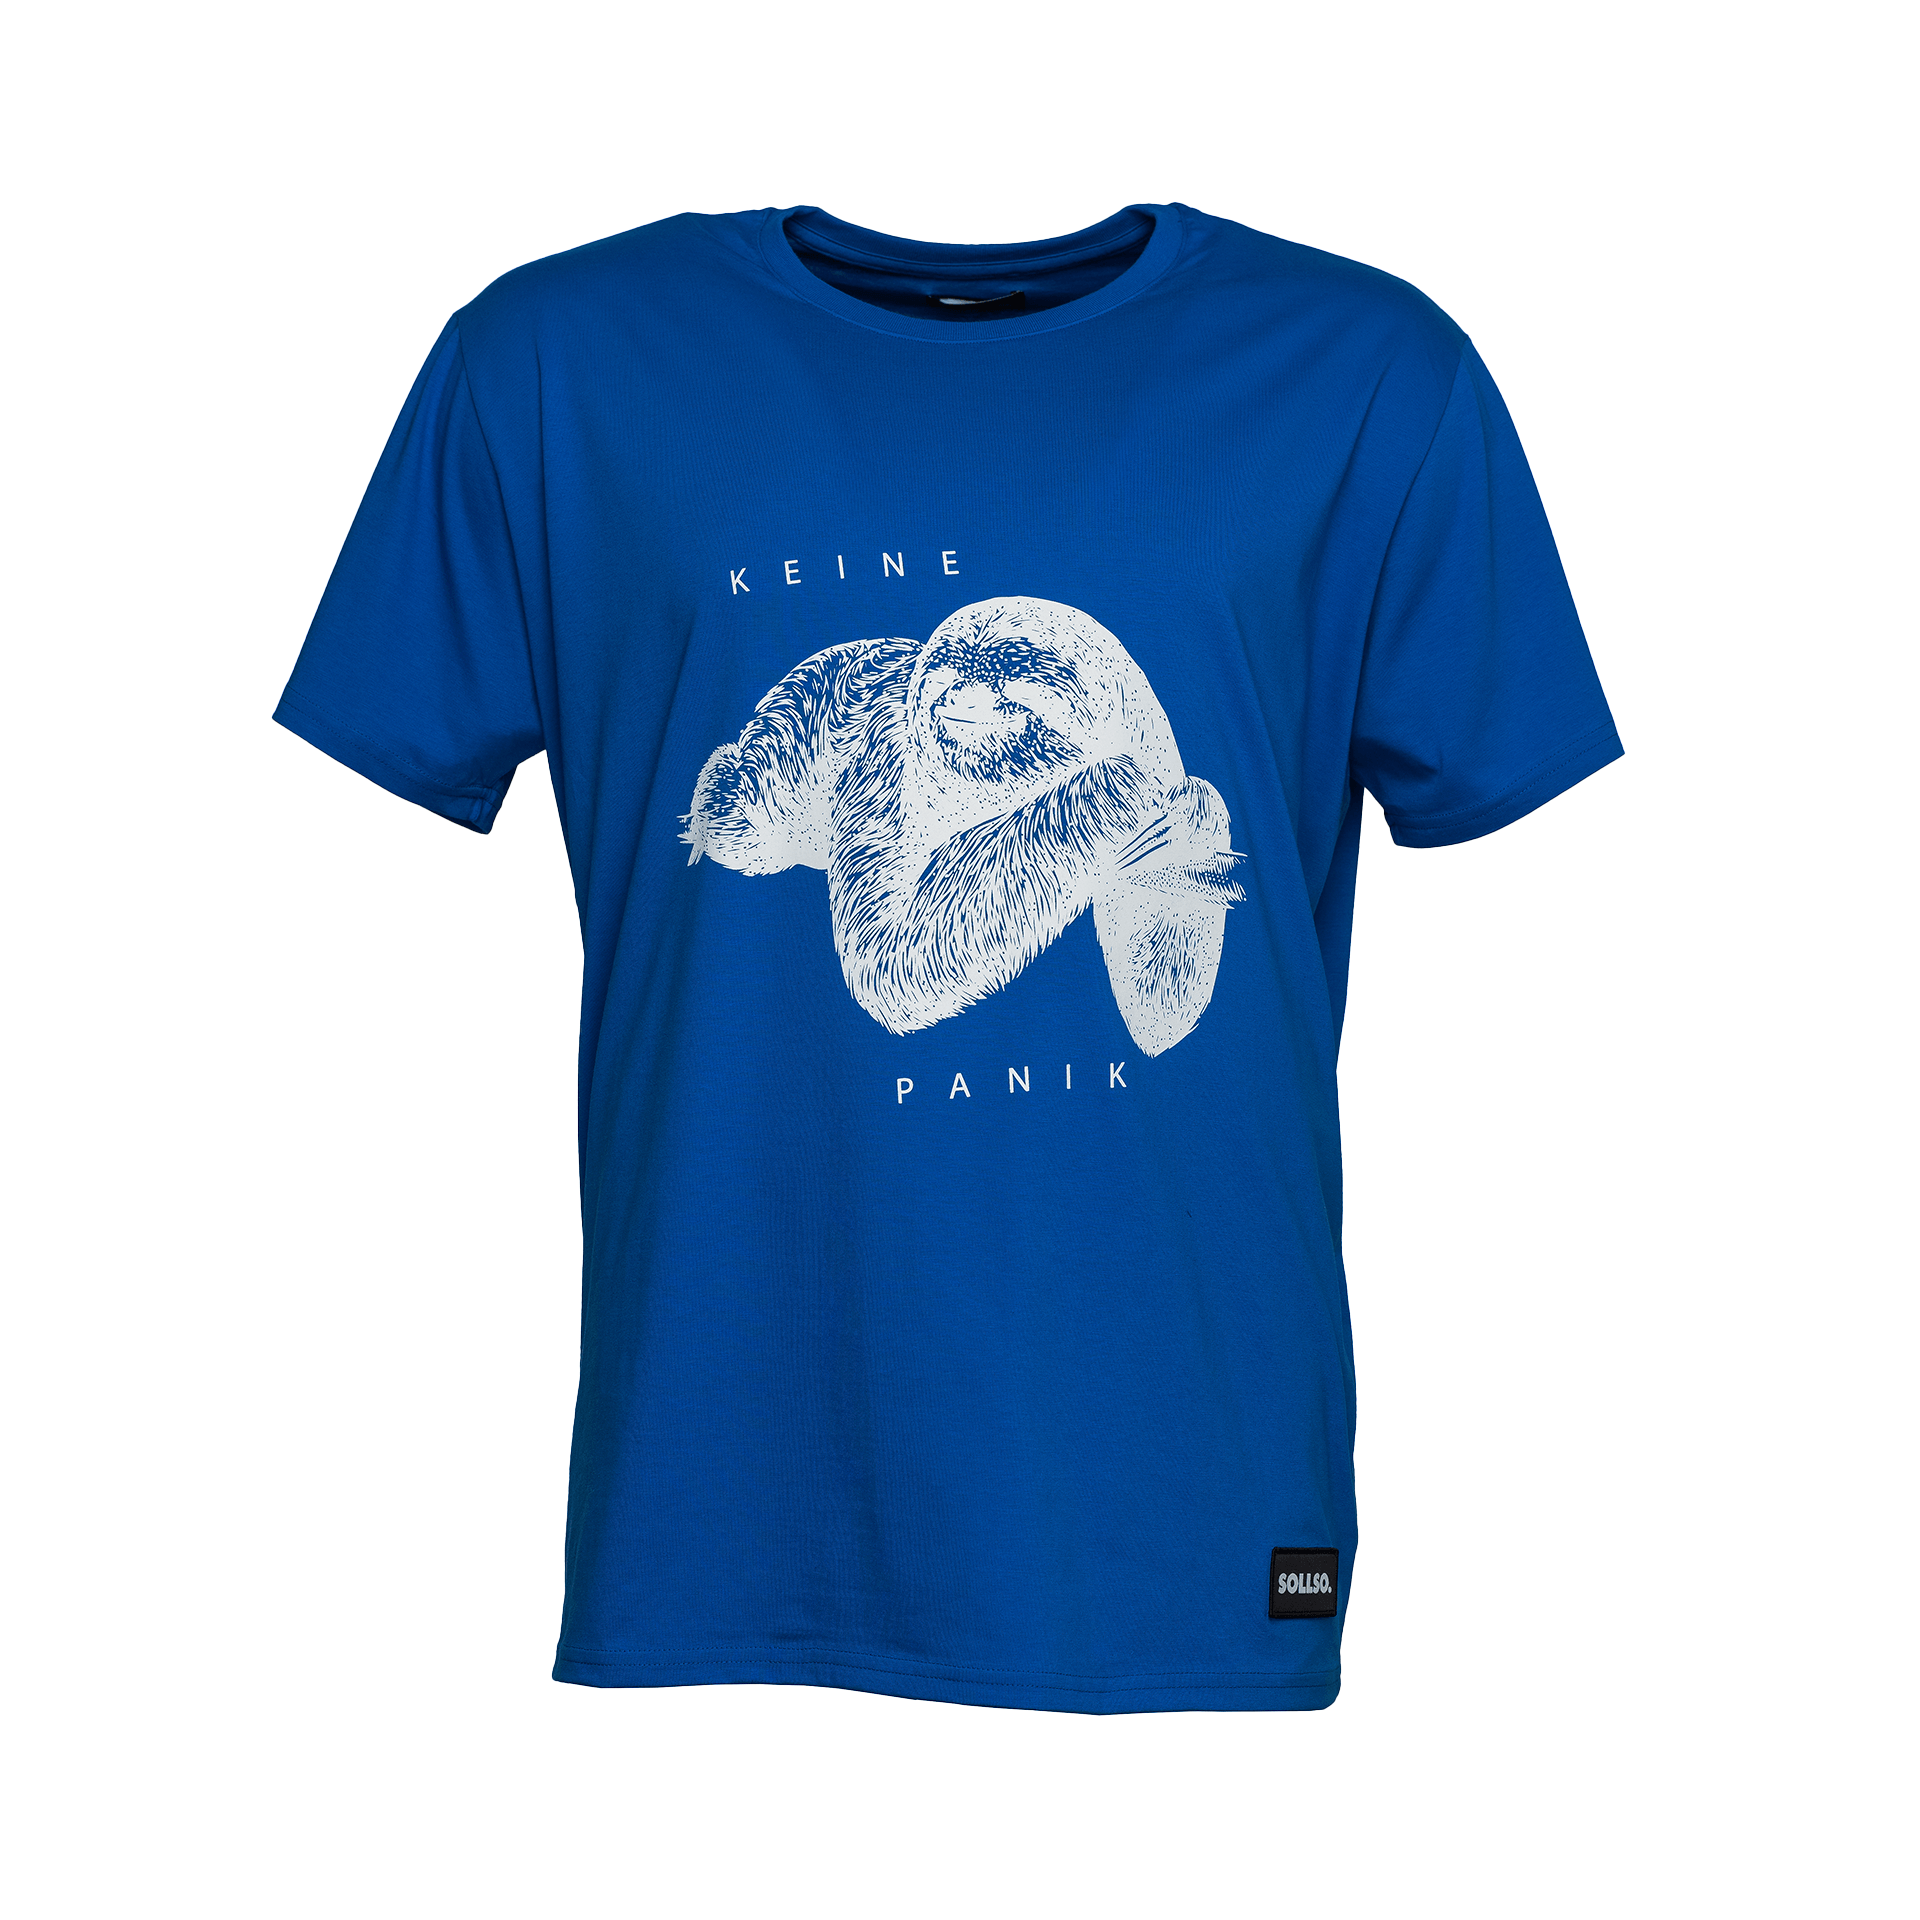 SOLLSO. T-Shirt "Keine Panik Faultier", Farbe Ocean Blue, Größe 5XL